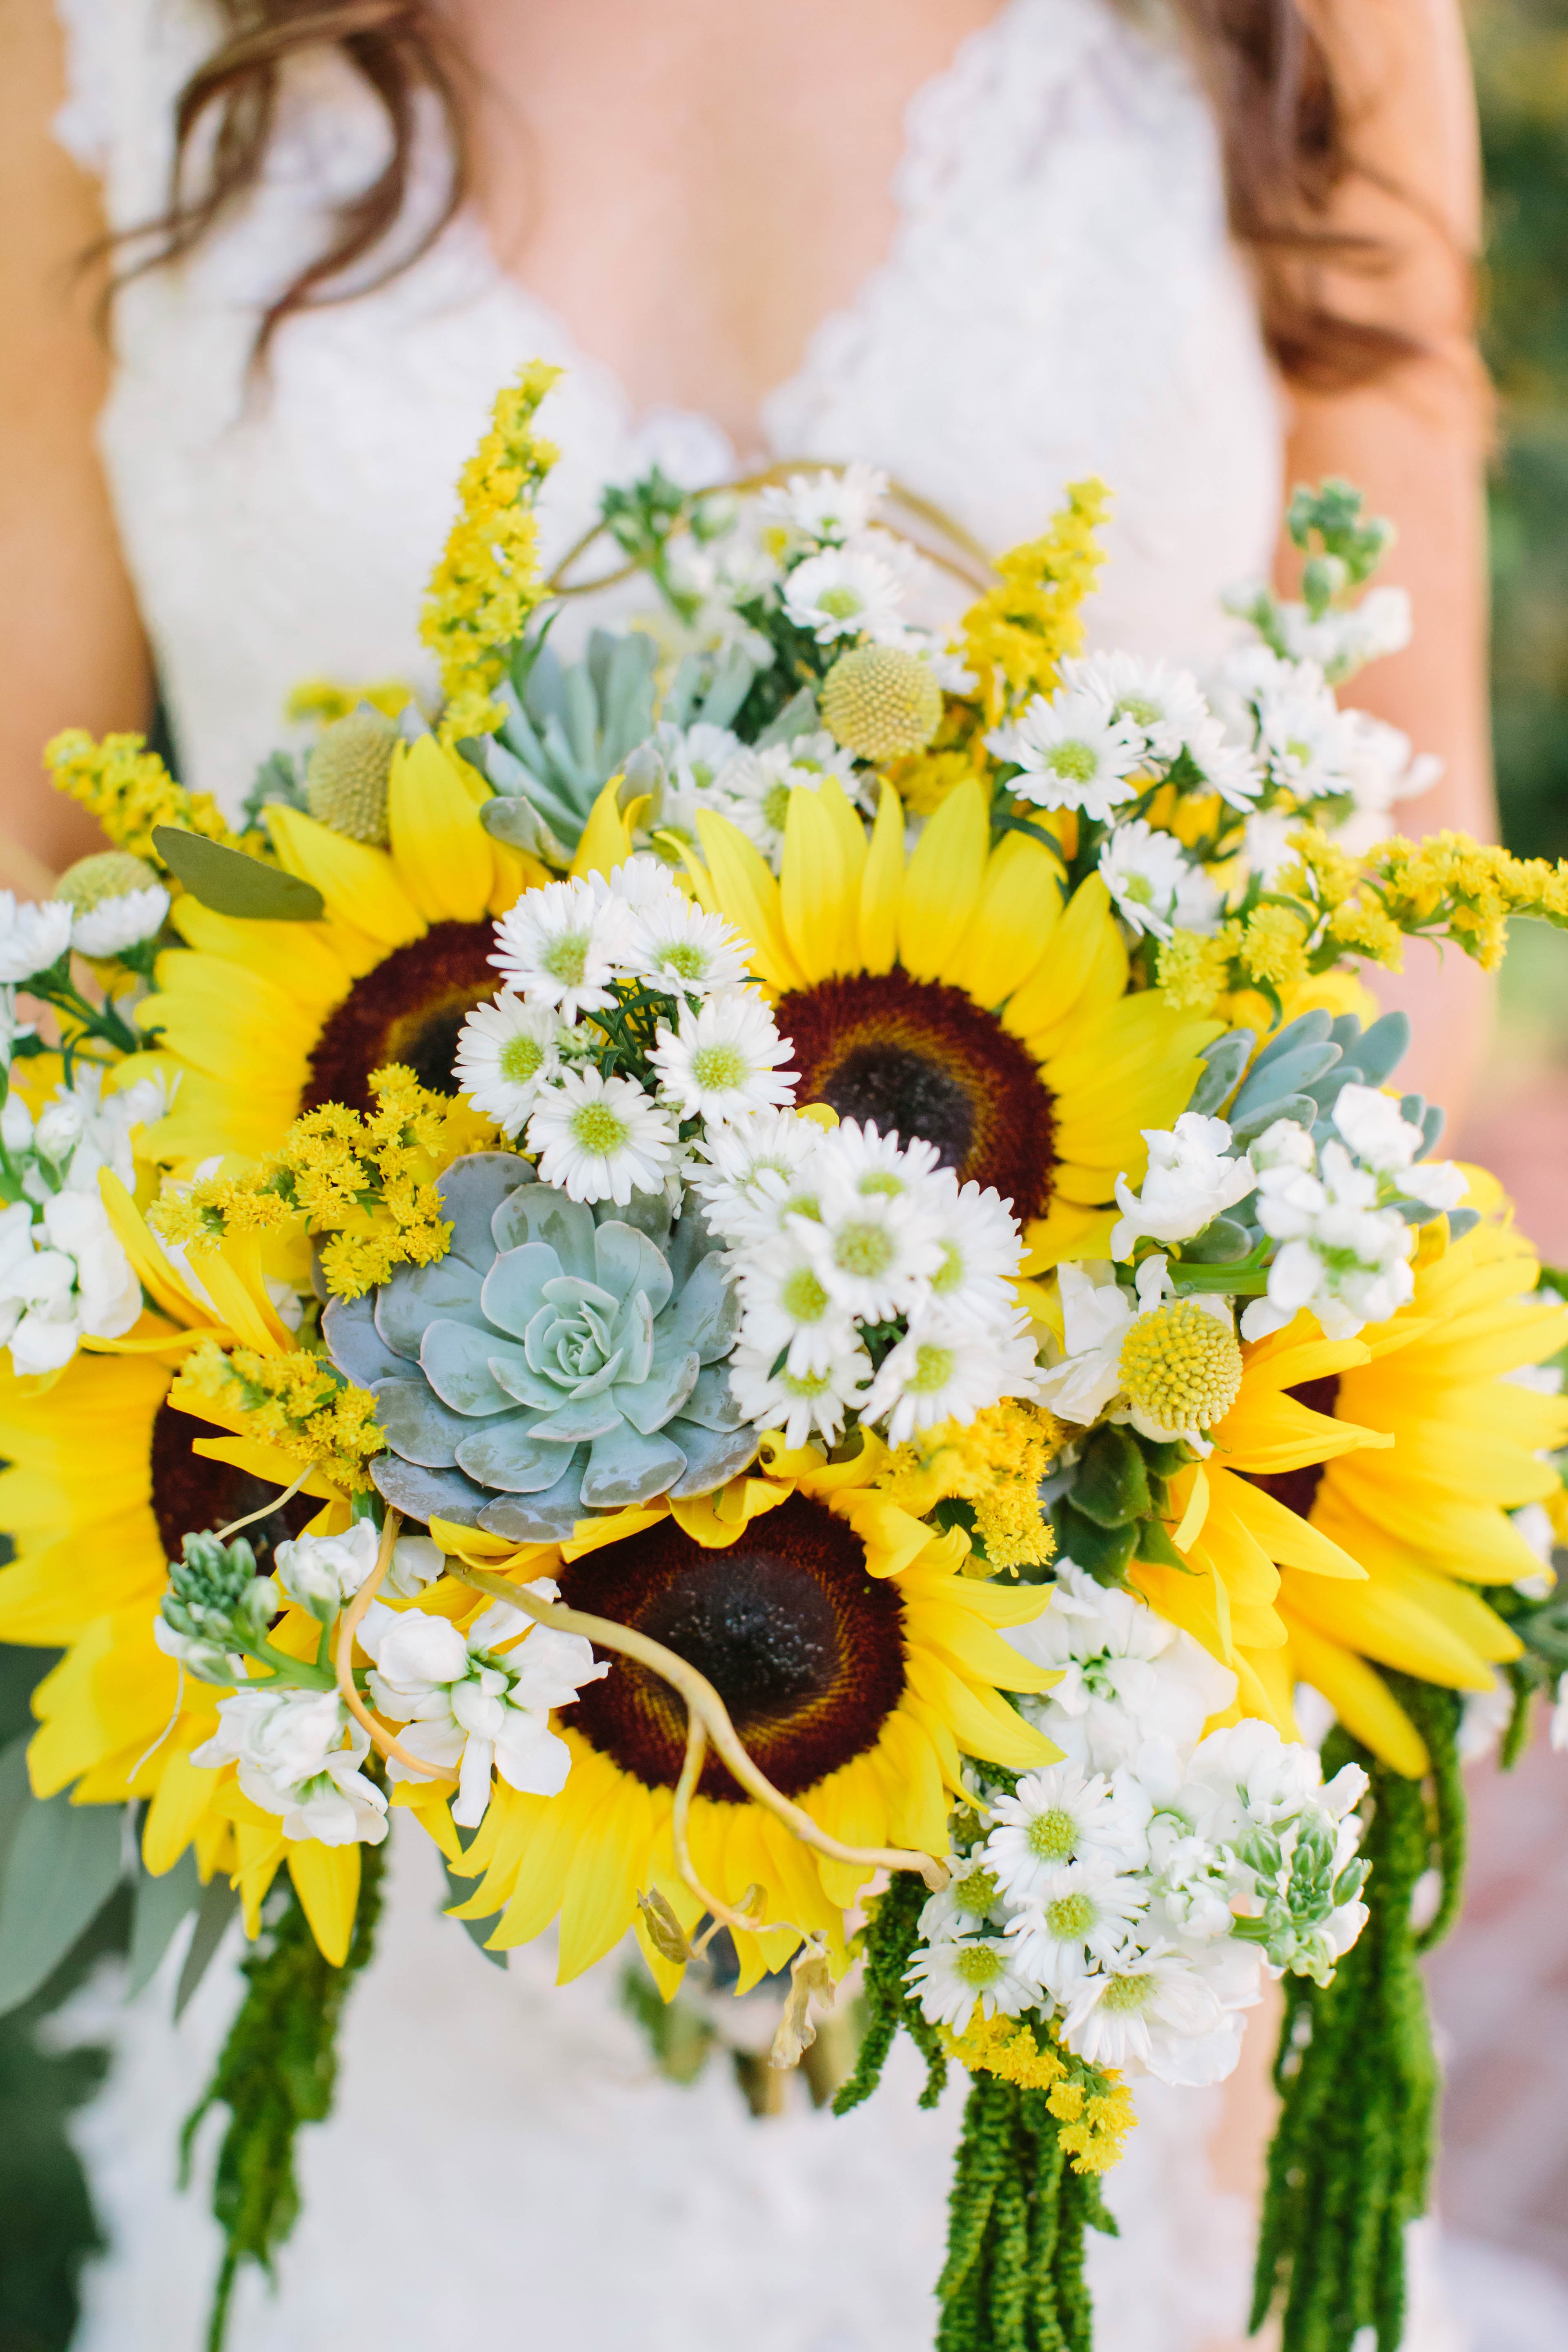 Summer Wedding Bouquets That Embrace the Season | Martha Stewart Weddings